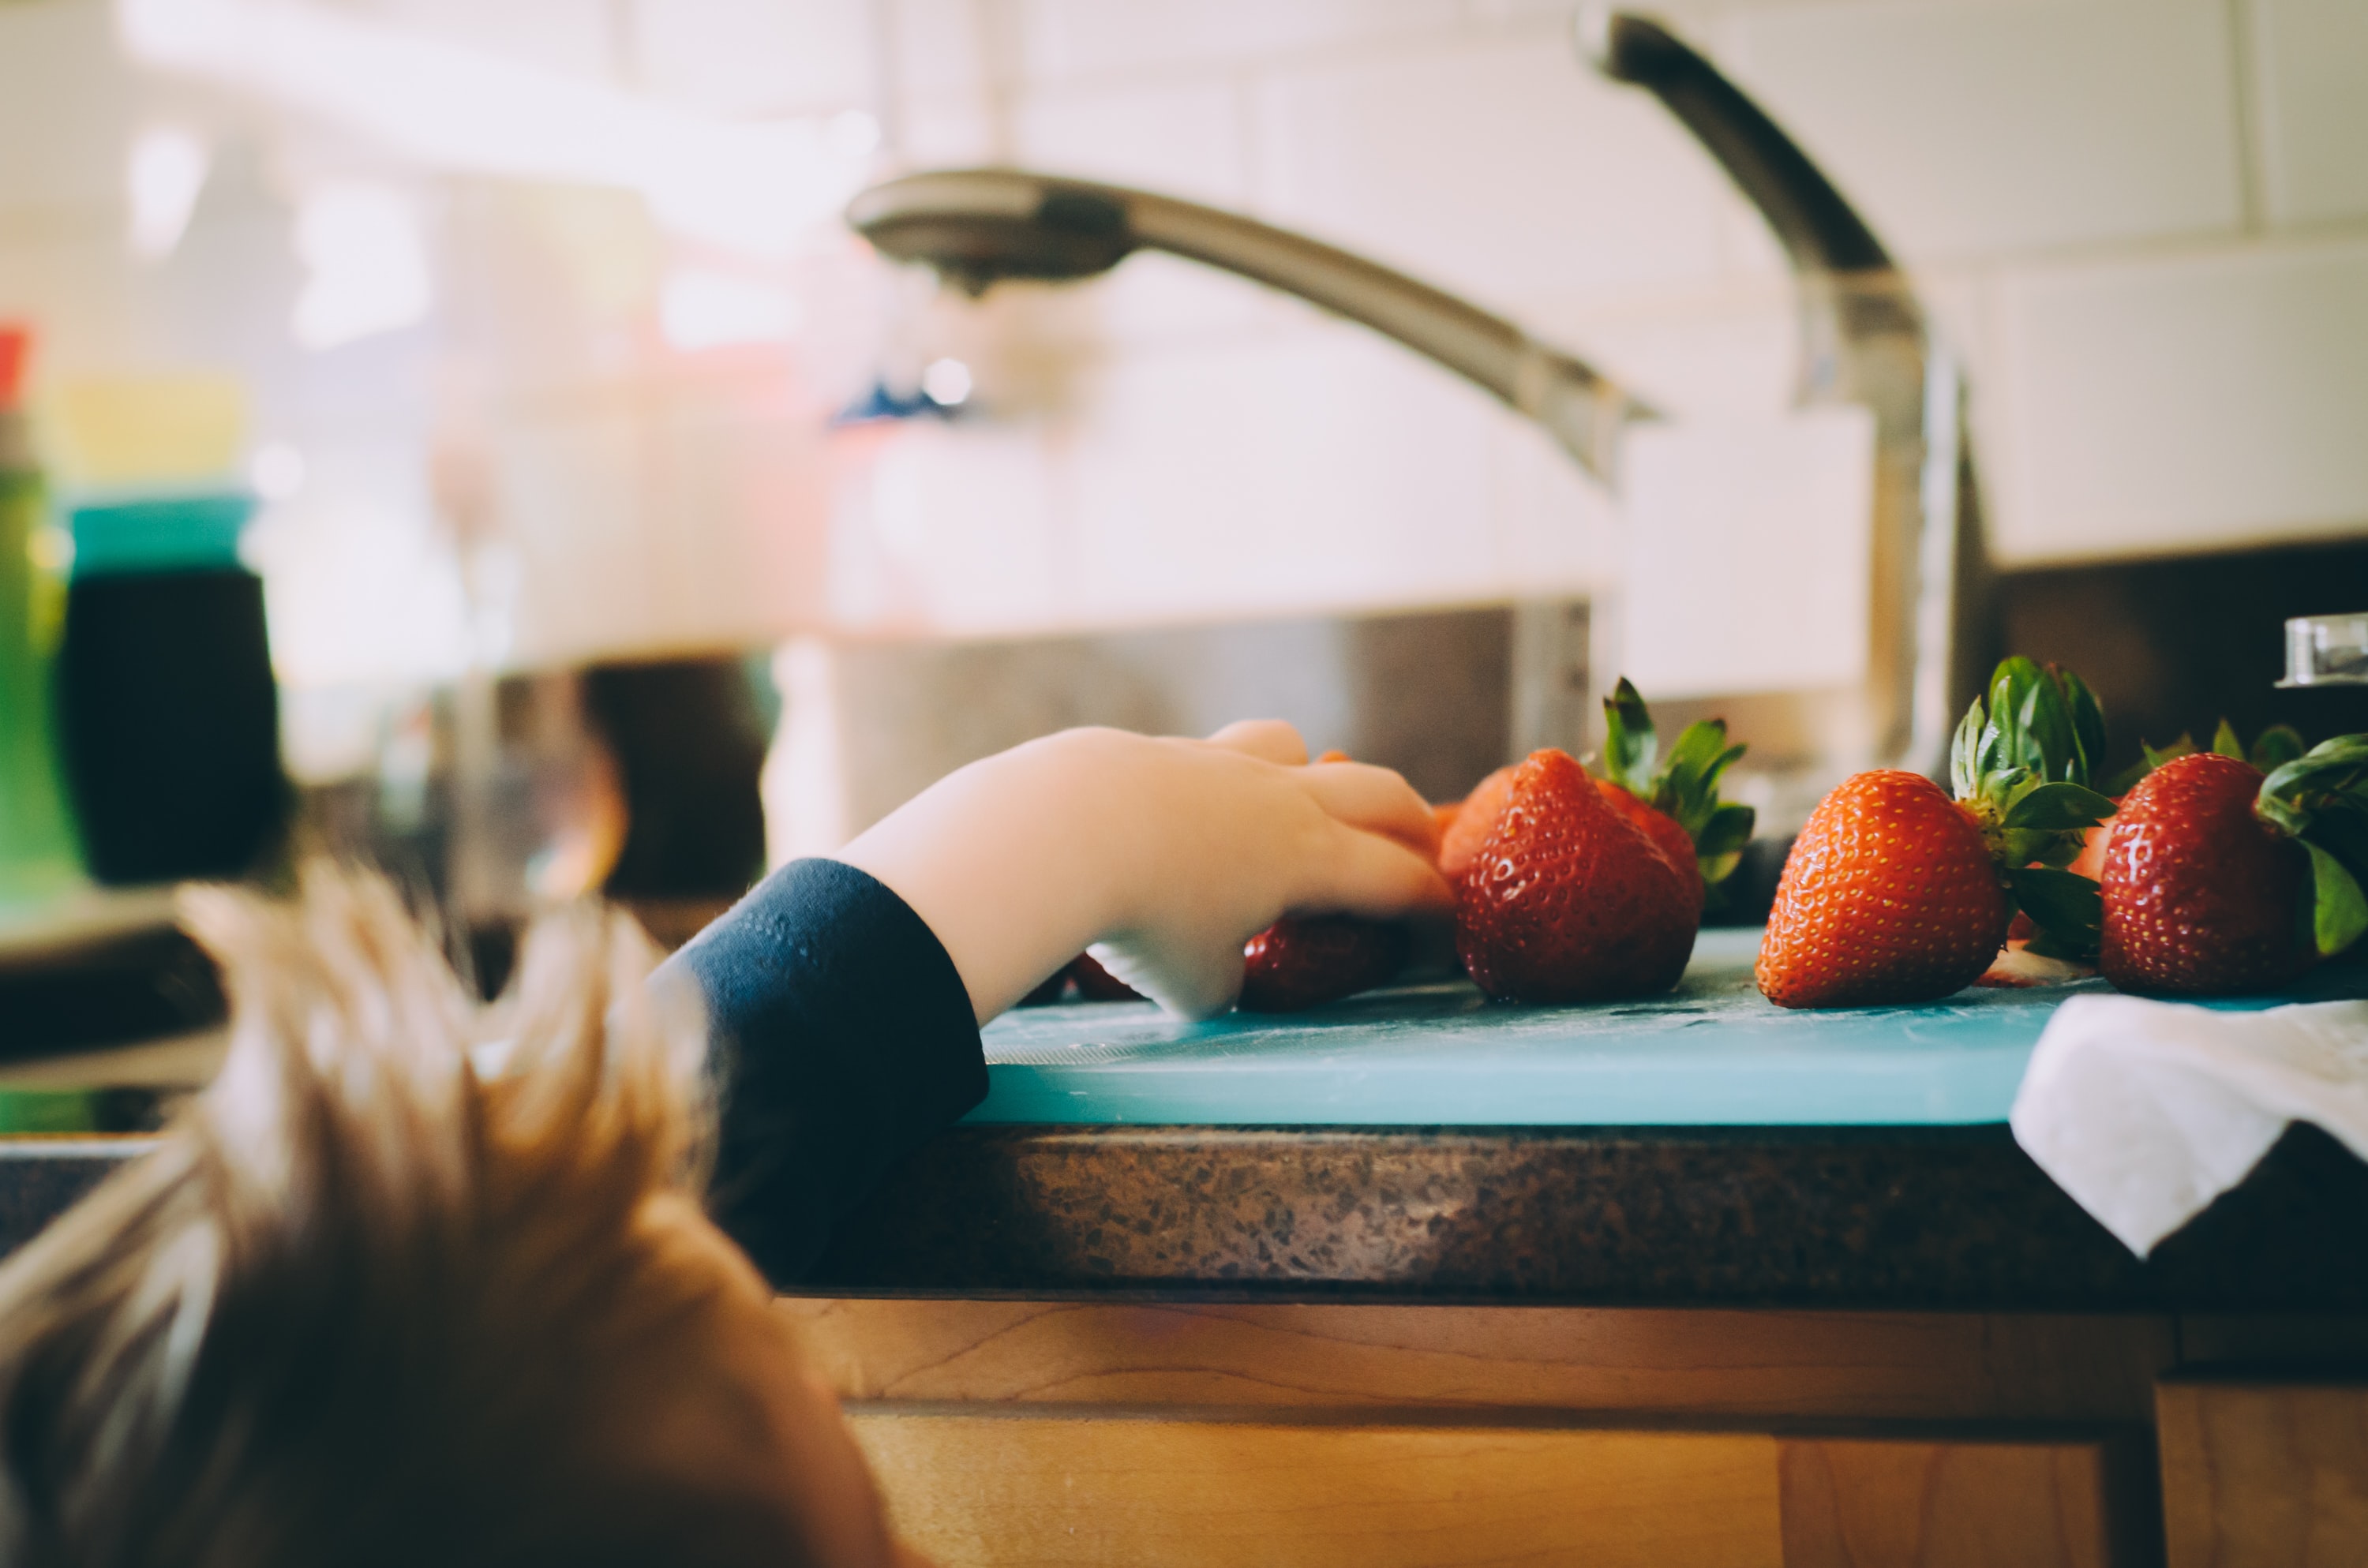 Child taking strawberry off of kitchen counter; image by Kelly Sikkema, via Unsplash.com.